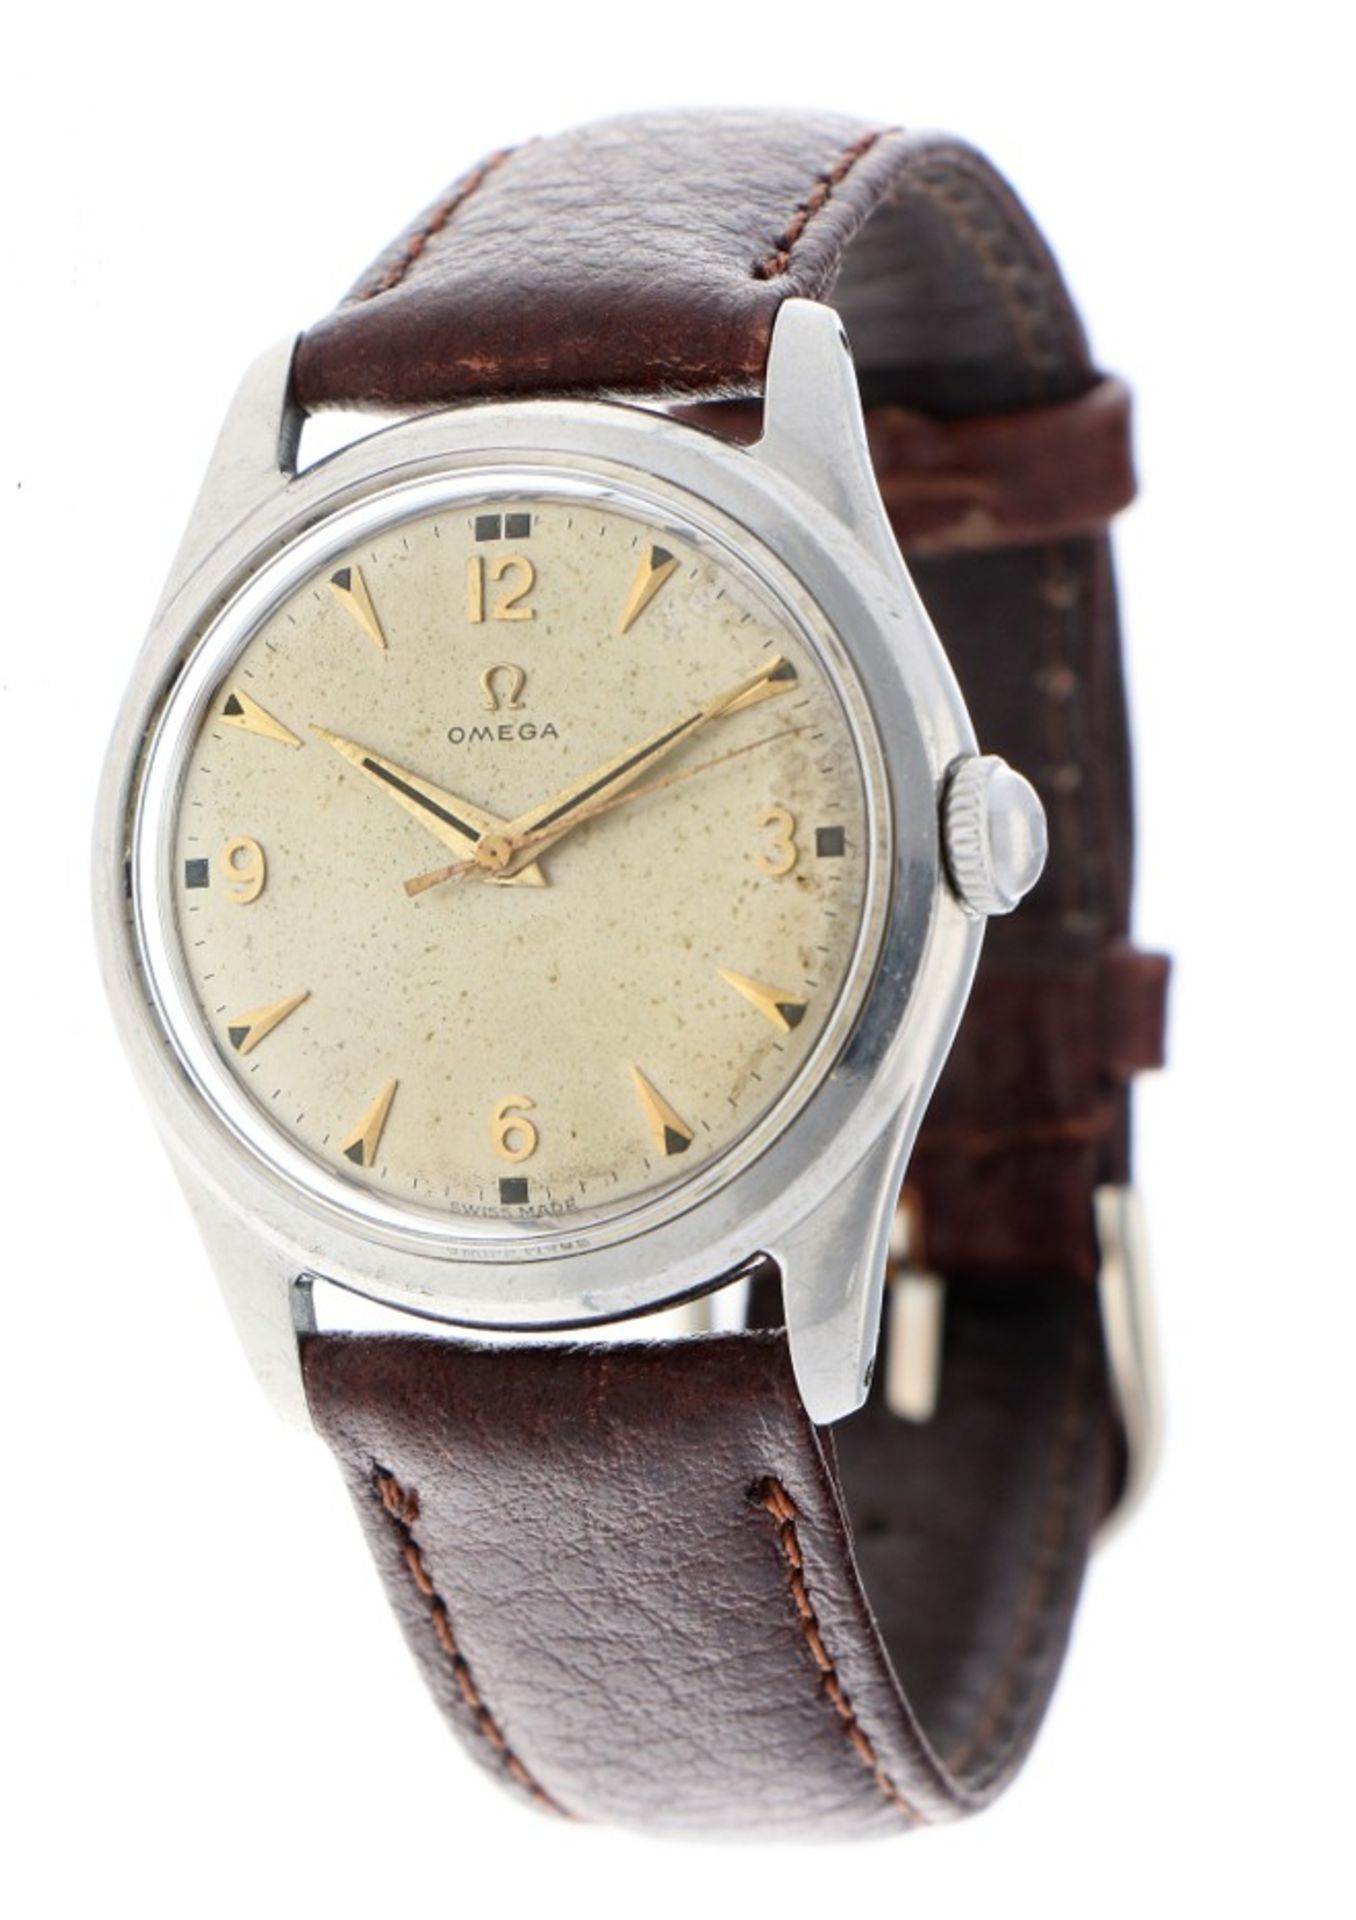 Omega 2690 SC - Men's watch - ca. 1952 - Image 2 of 7